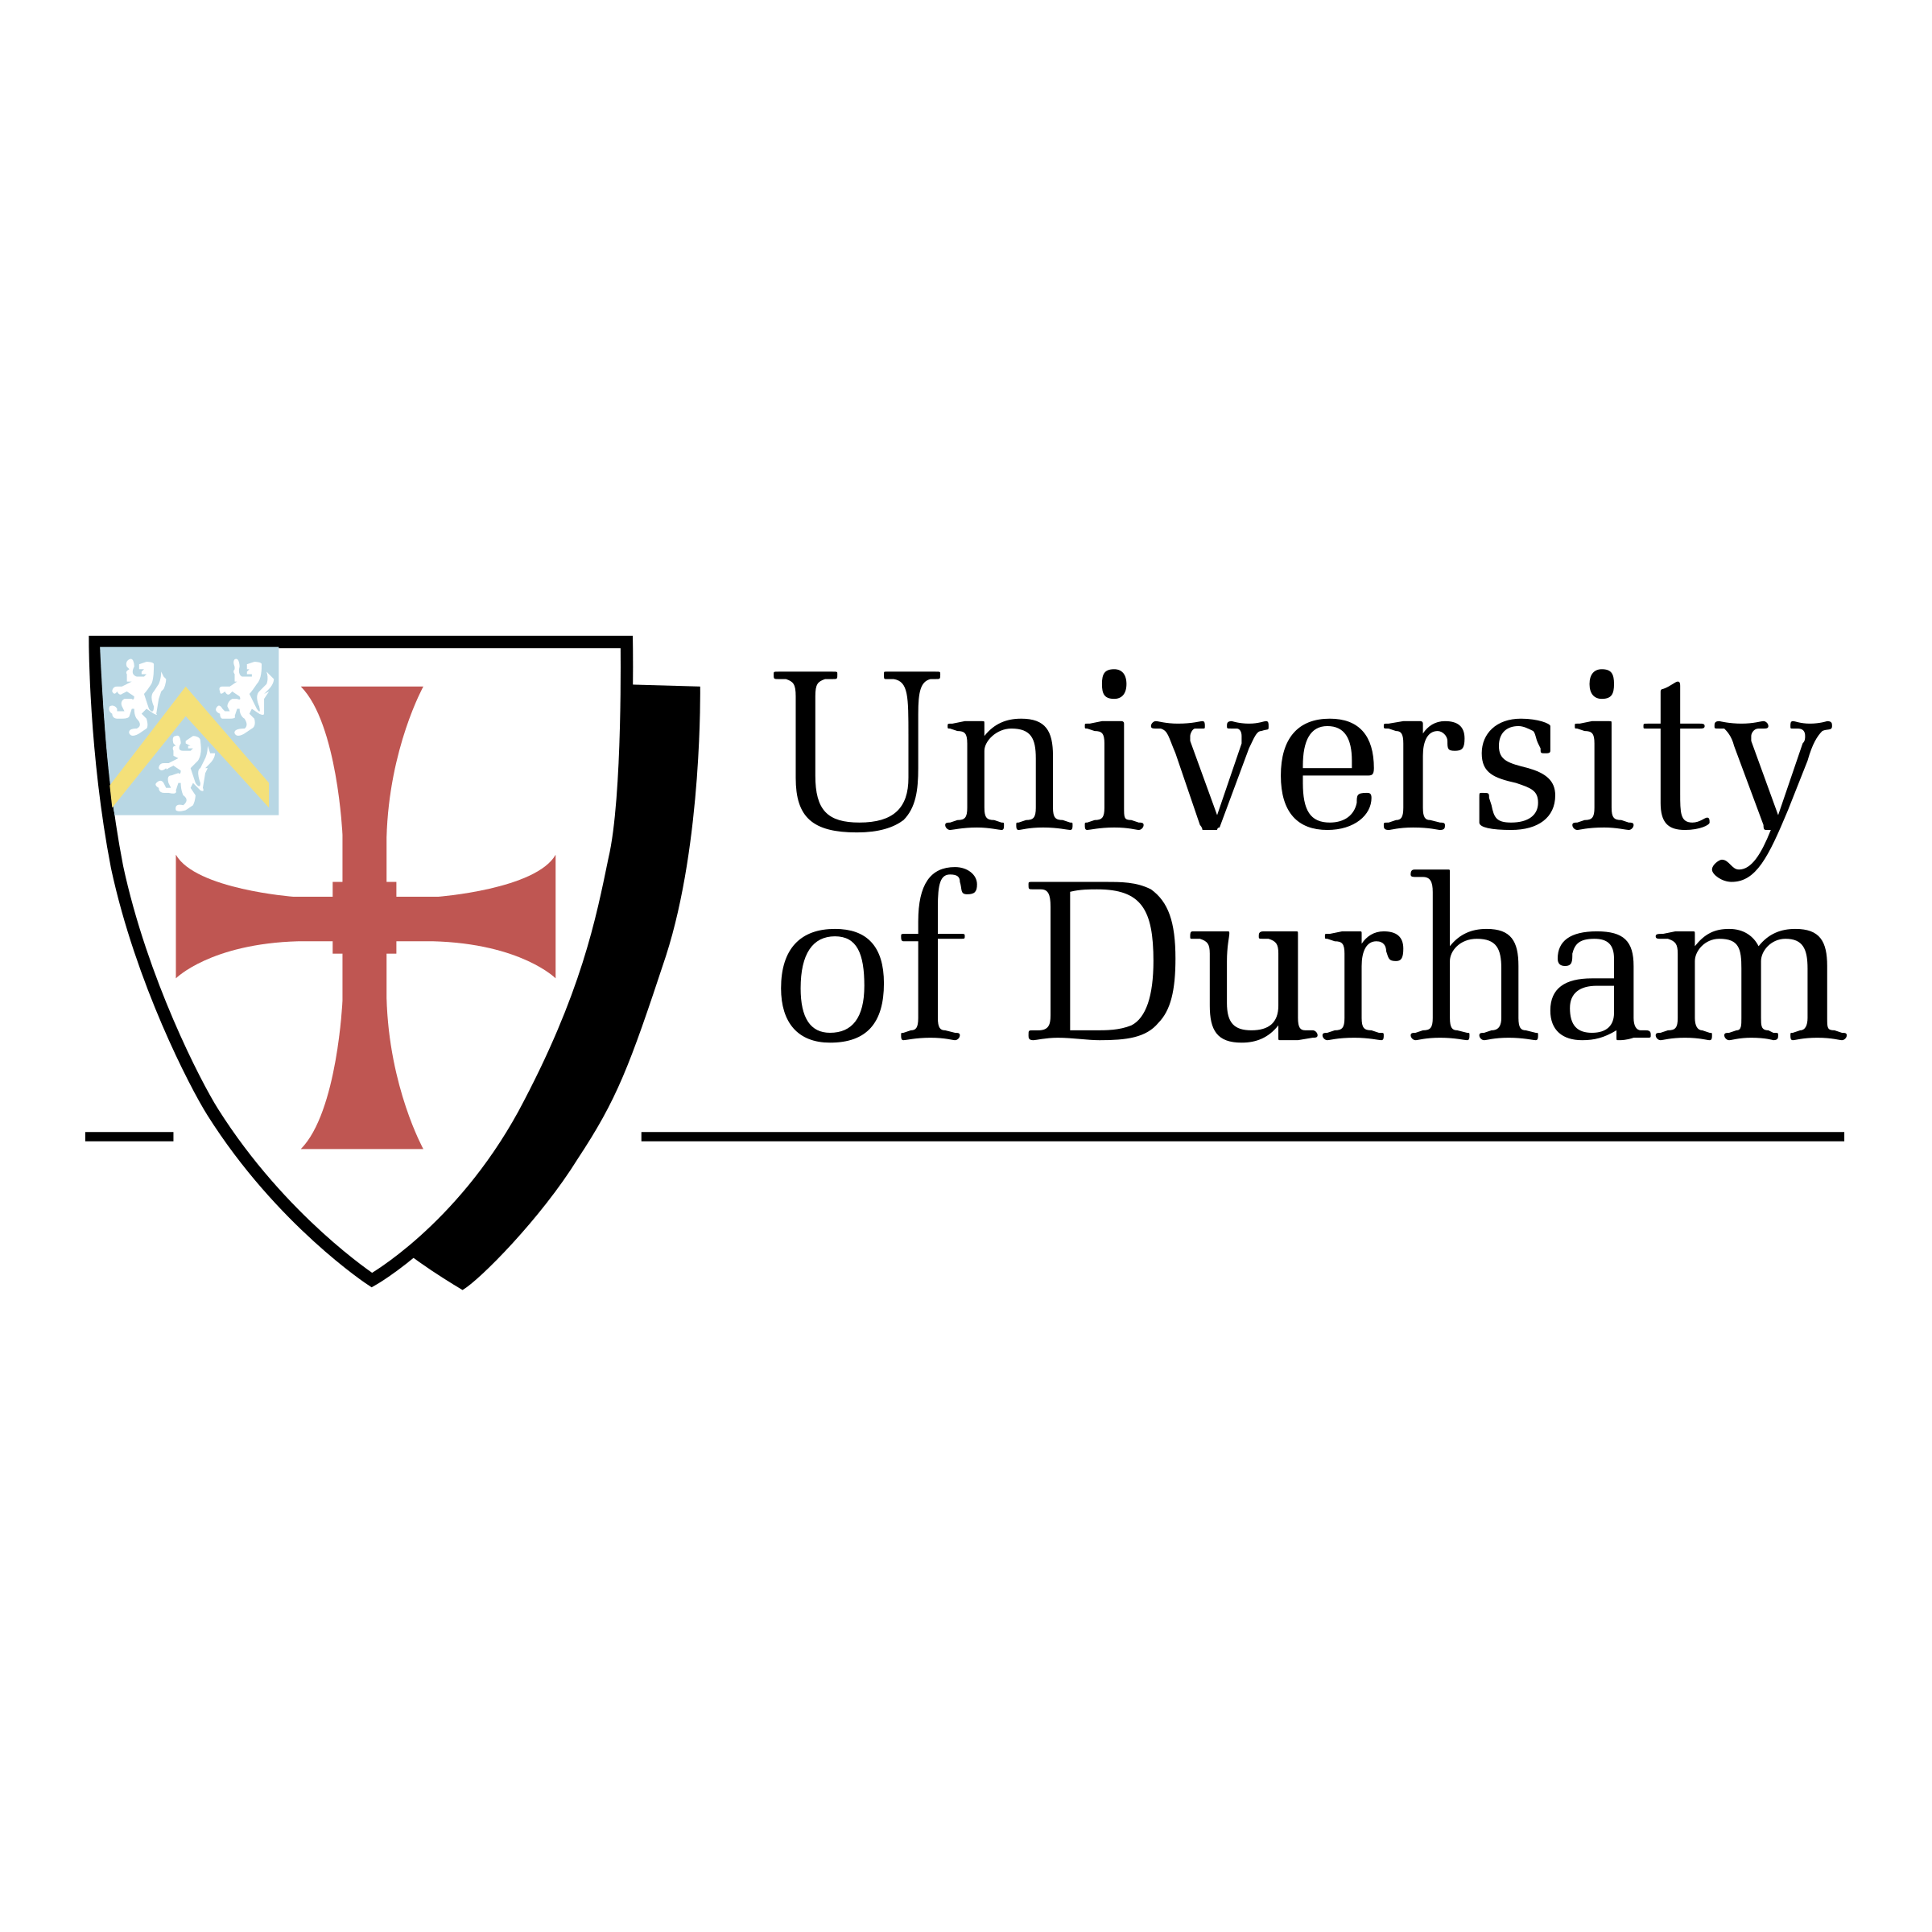 Durham Logo - University of Durham Logo PNG Transparent & SVG Vector - Freebie Supply